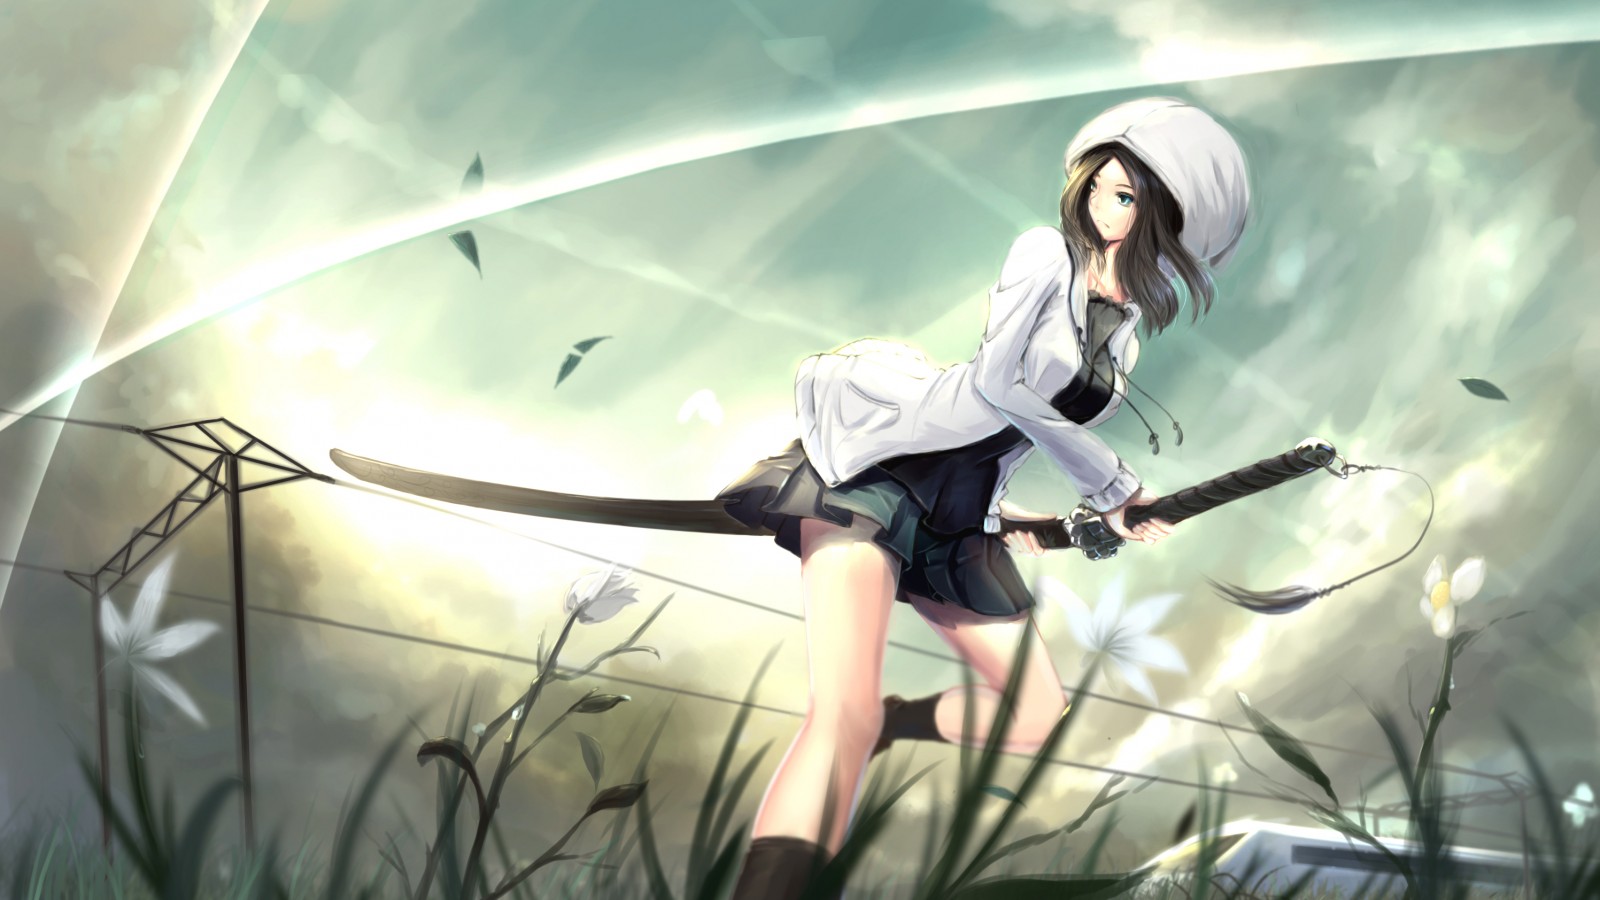 Download Wallpaper - Anime Girl With Katana , HD Wallpaper & Backgrounds